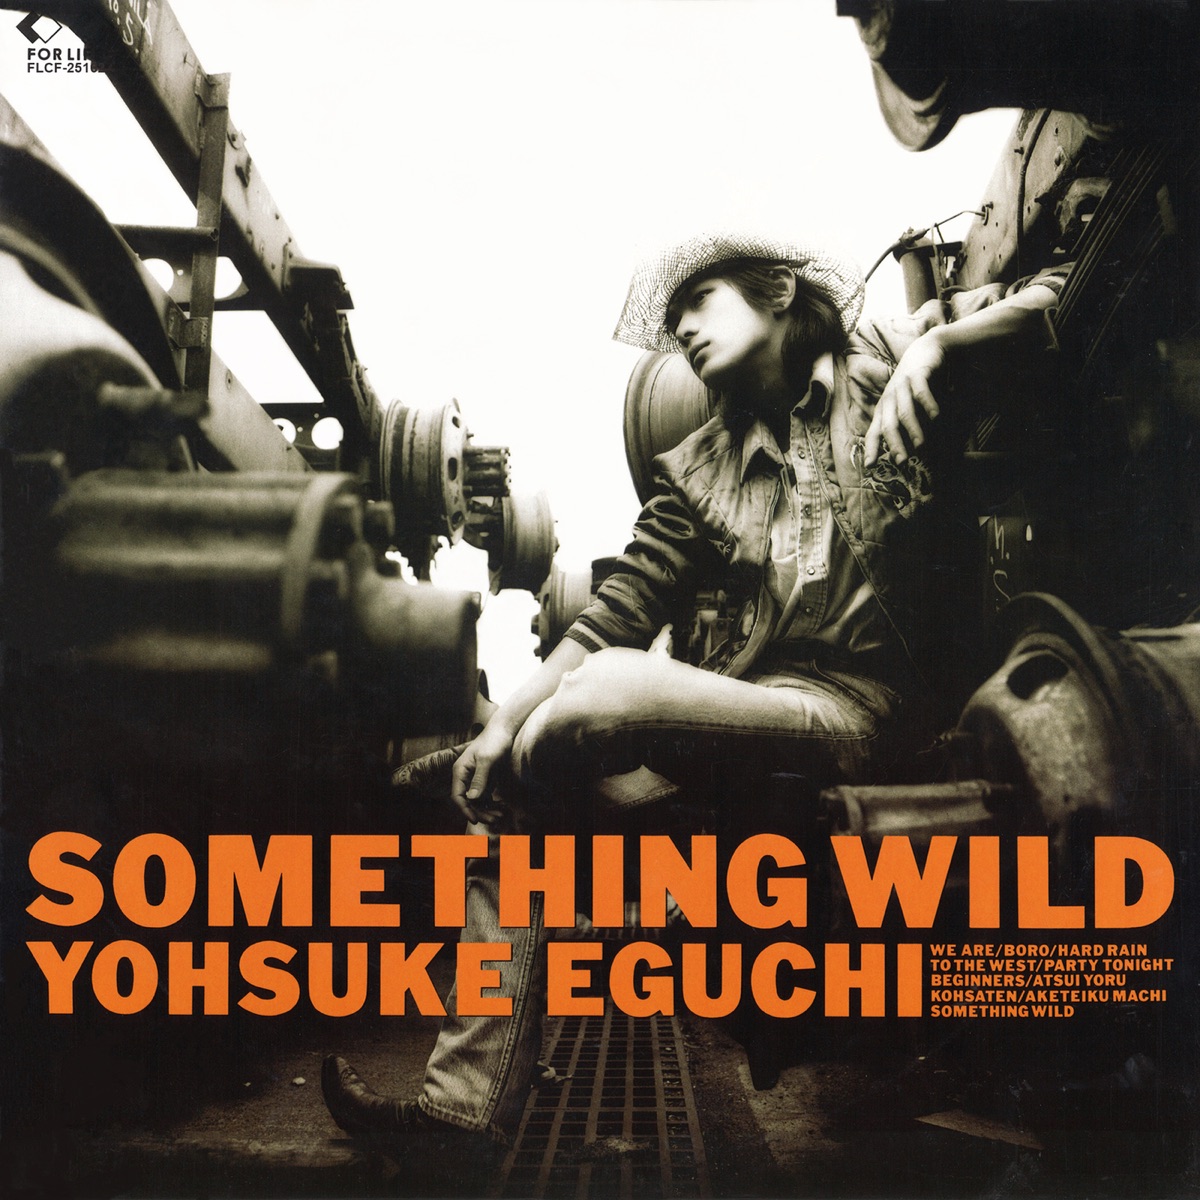 Free Life The Best of YOSUKE EGUCHI 1994-1998 - Album by 江口洋介 